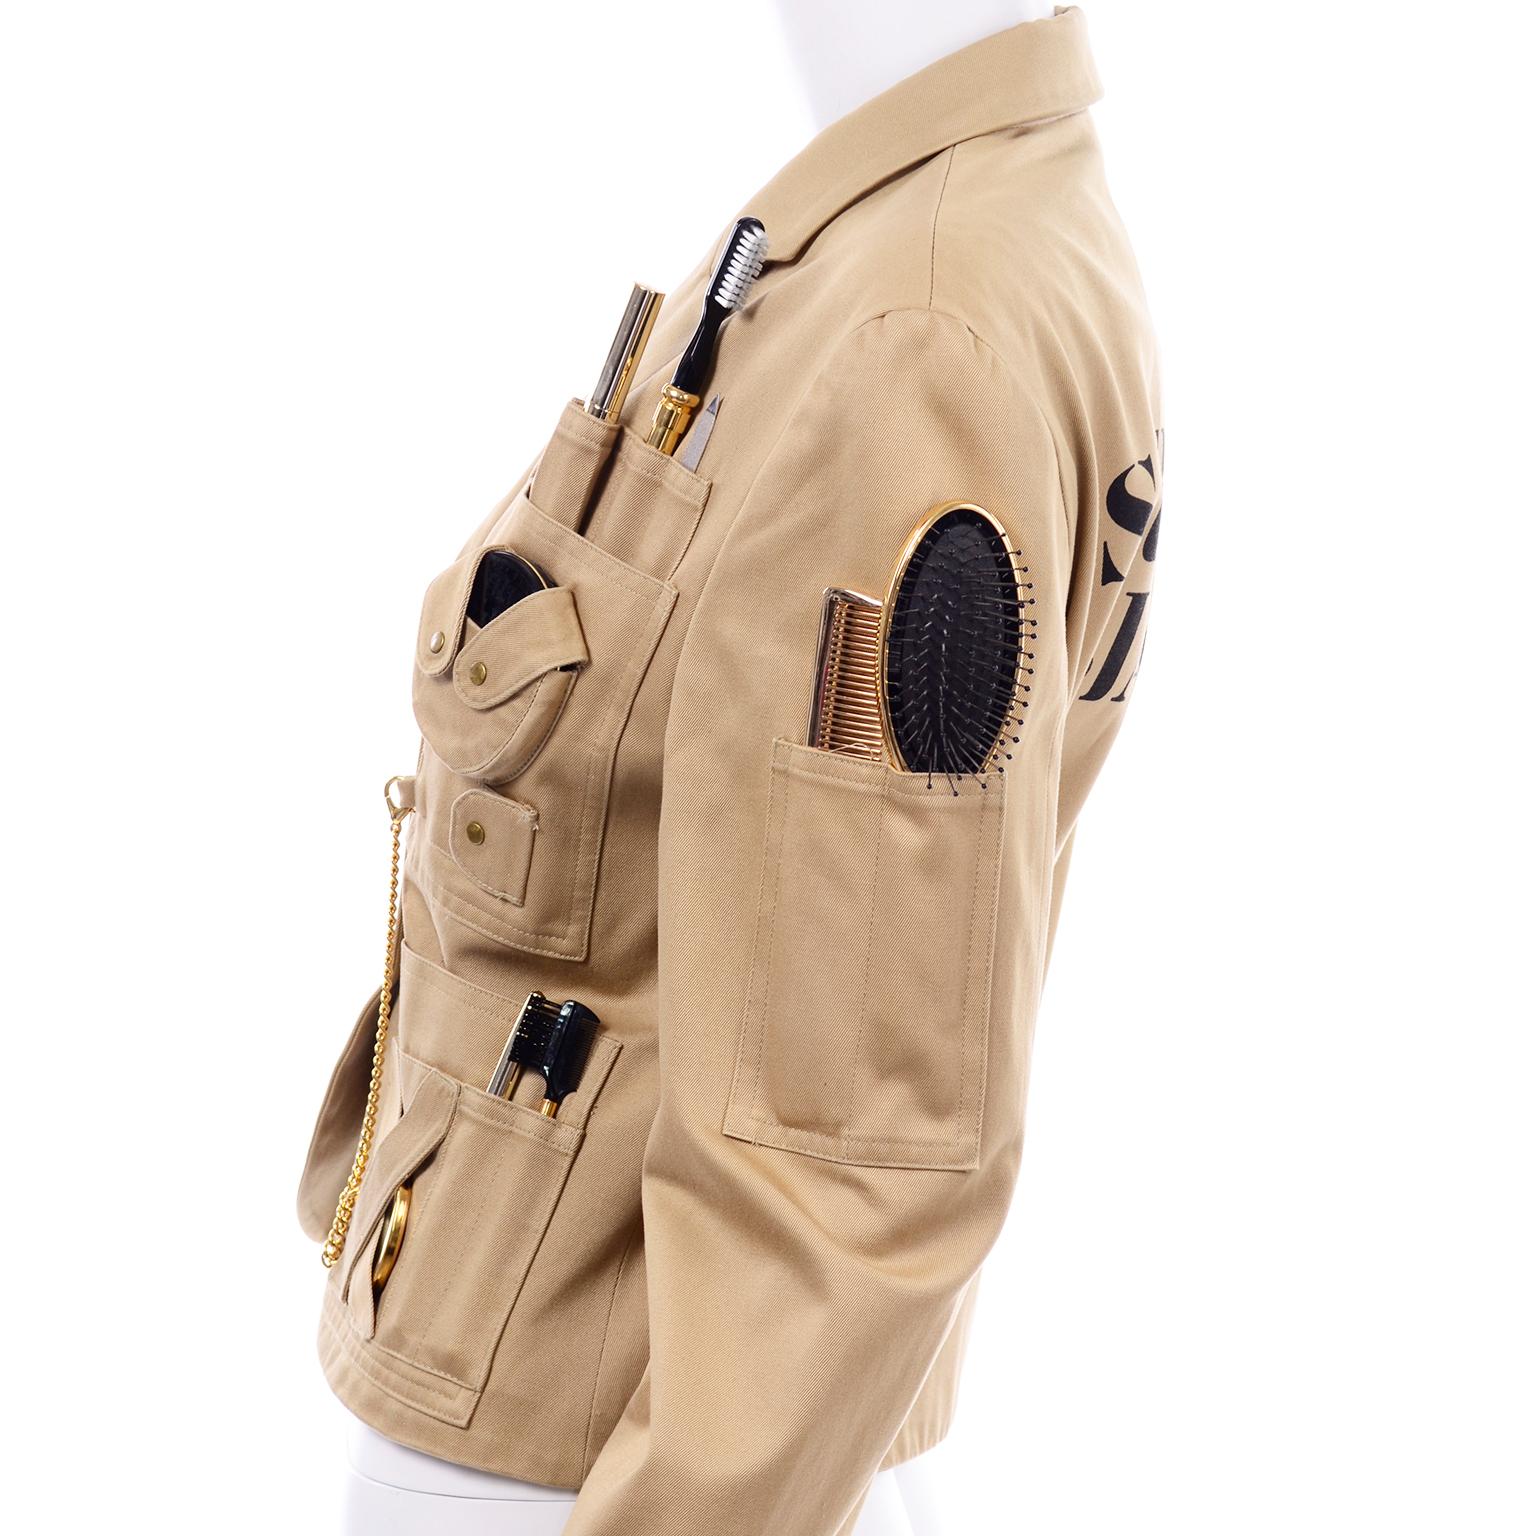 1991 Franco Moschino Couture Survival Jacket in Khaki Cotton Urban Jungle Tools 7